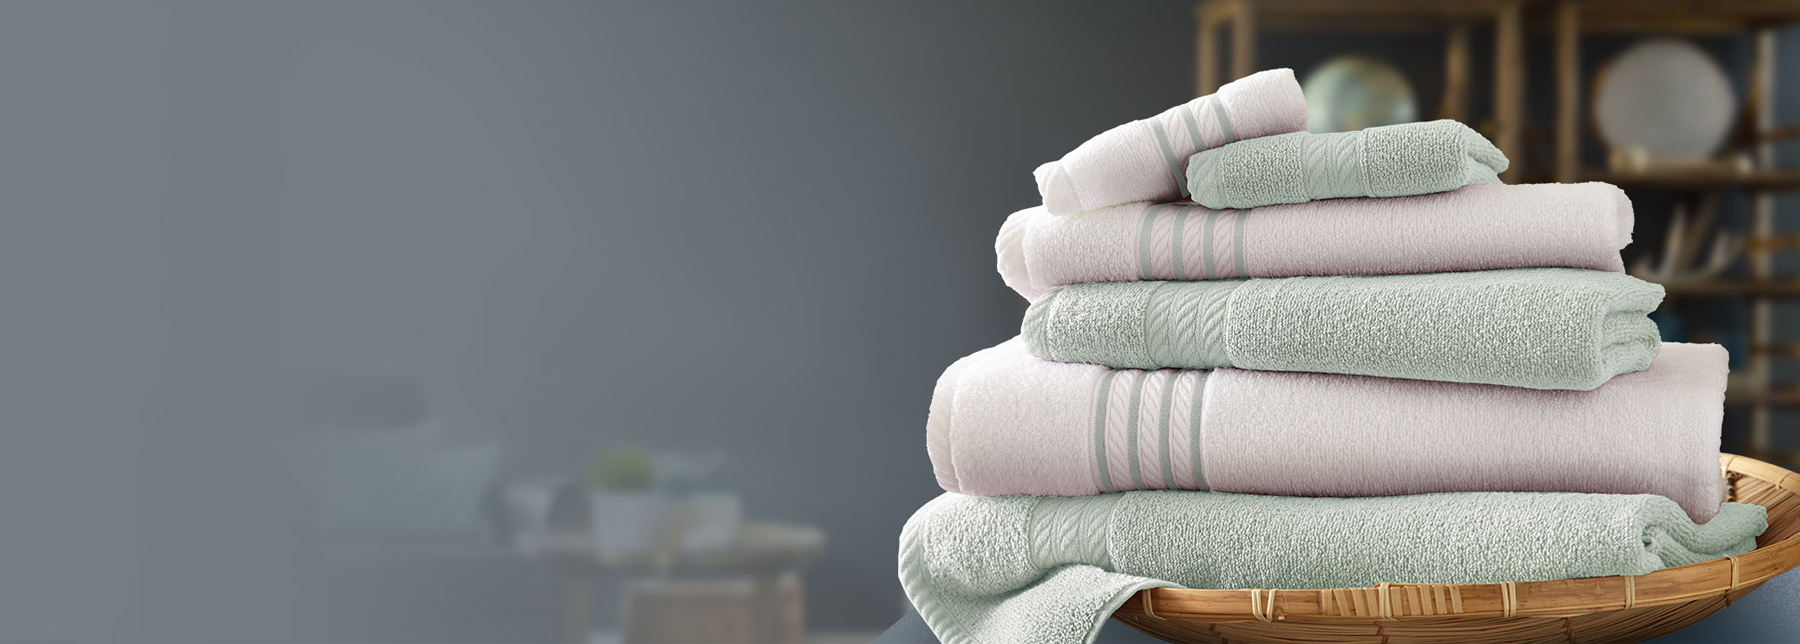 custom towel manufacturer